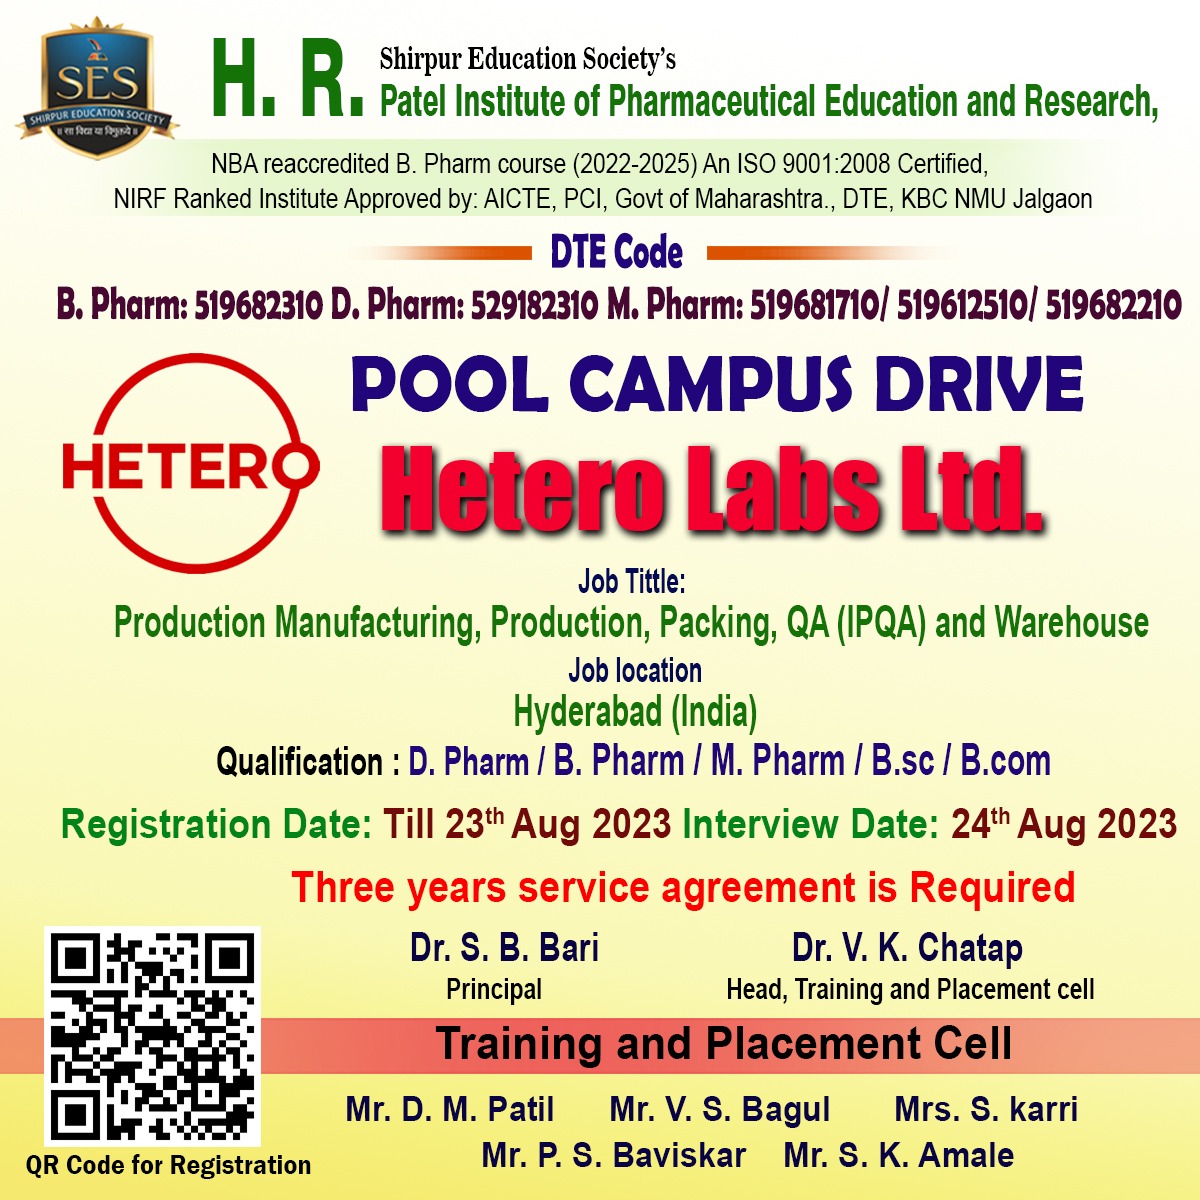 Pool Campus Interview of Hetero Pharma Pvt. Ltd, Hyderabad for Production, QA, QC IPQC, Warehouse